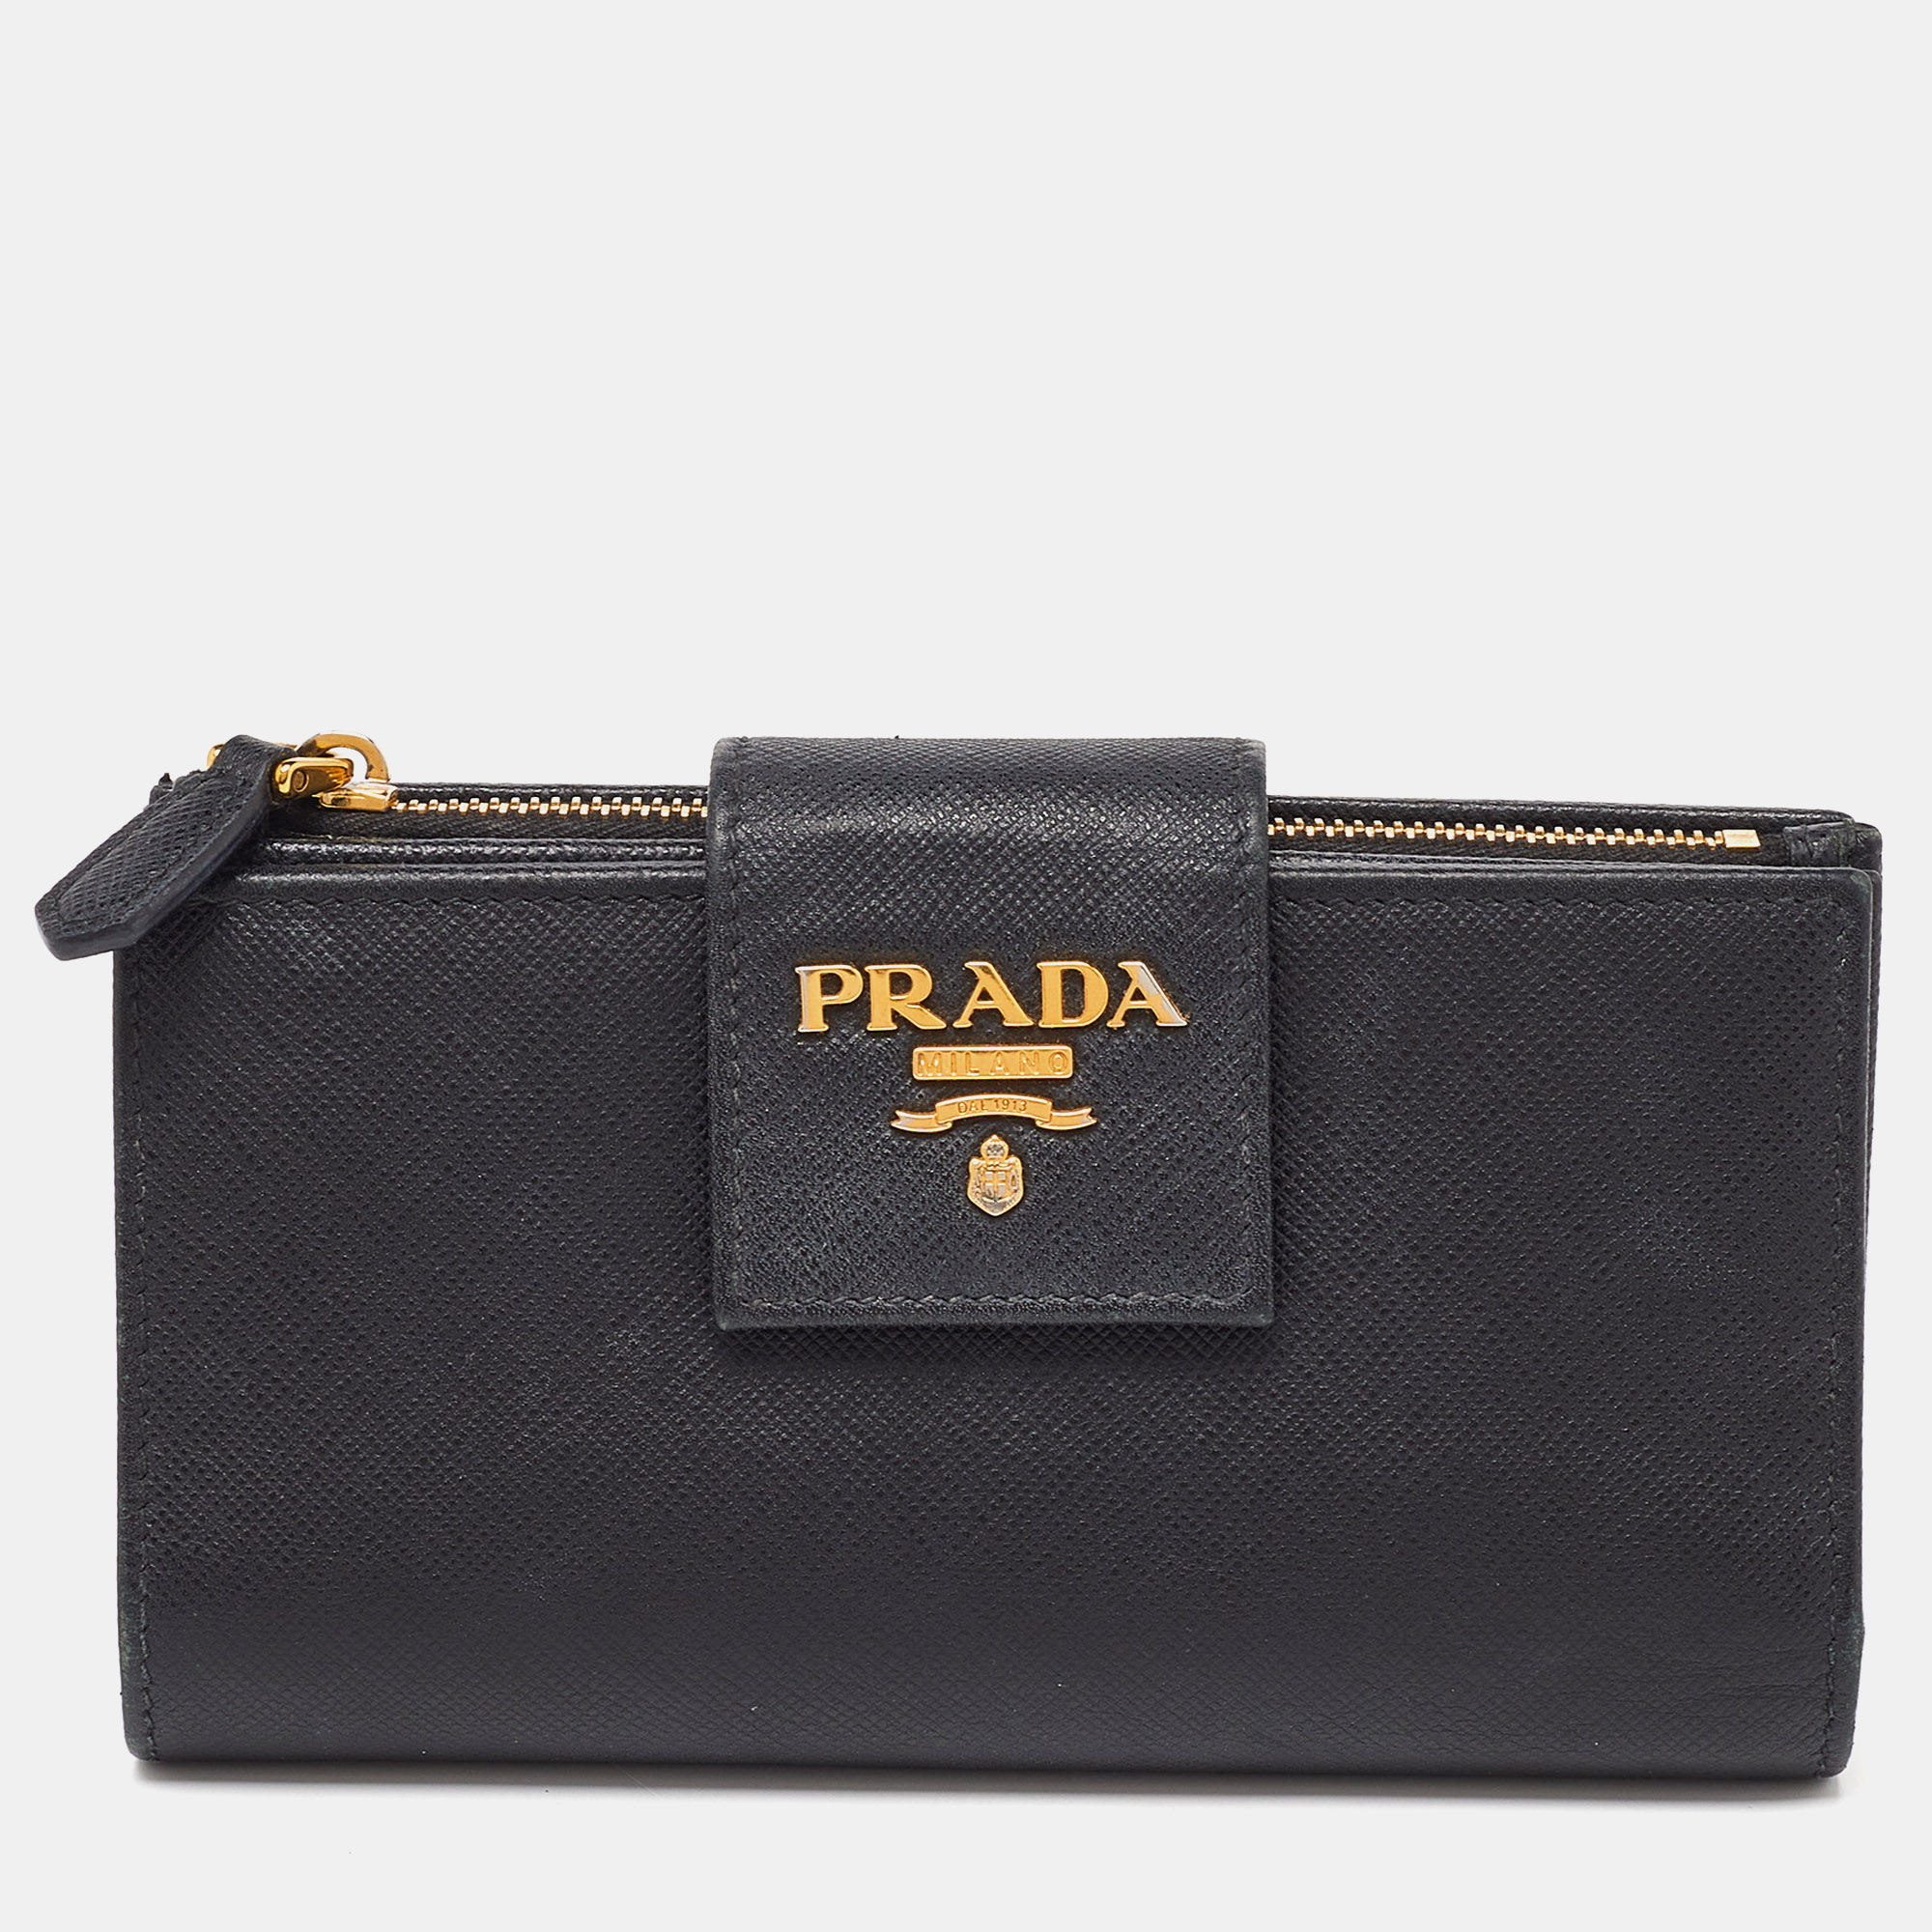 

Prada Black Saffiano Metal Leather Compact Wallet